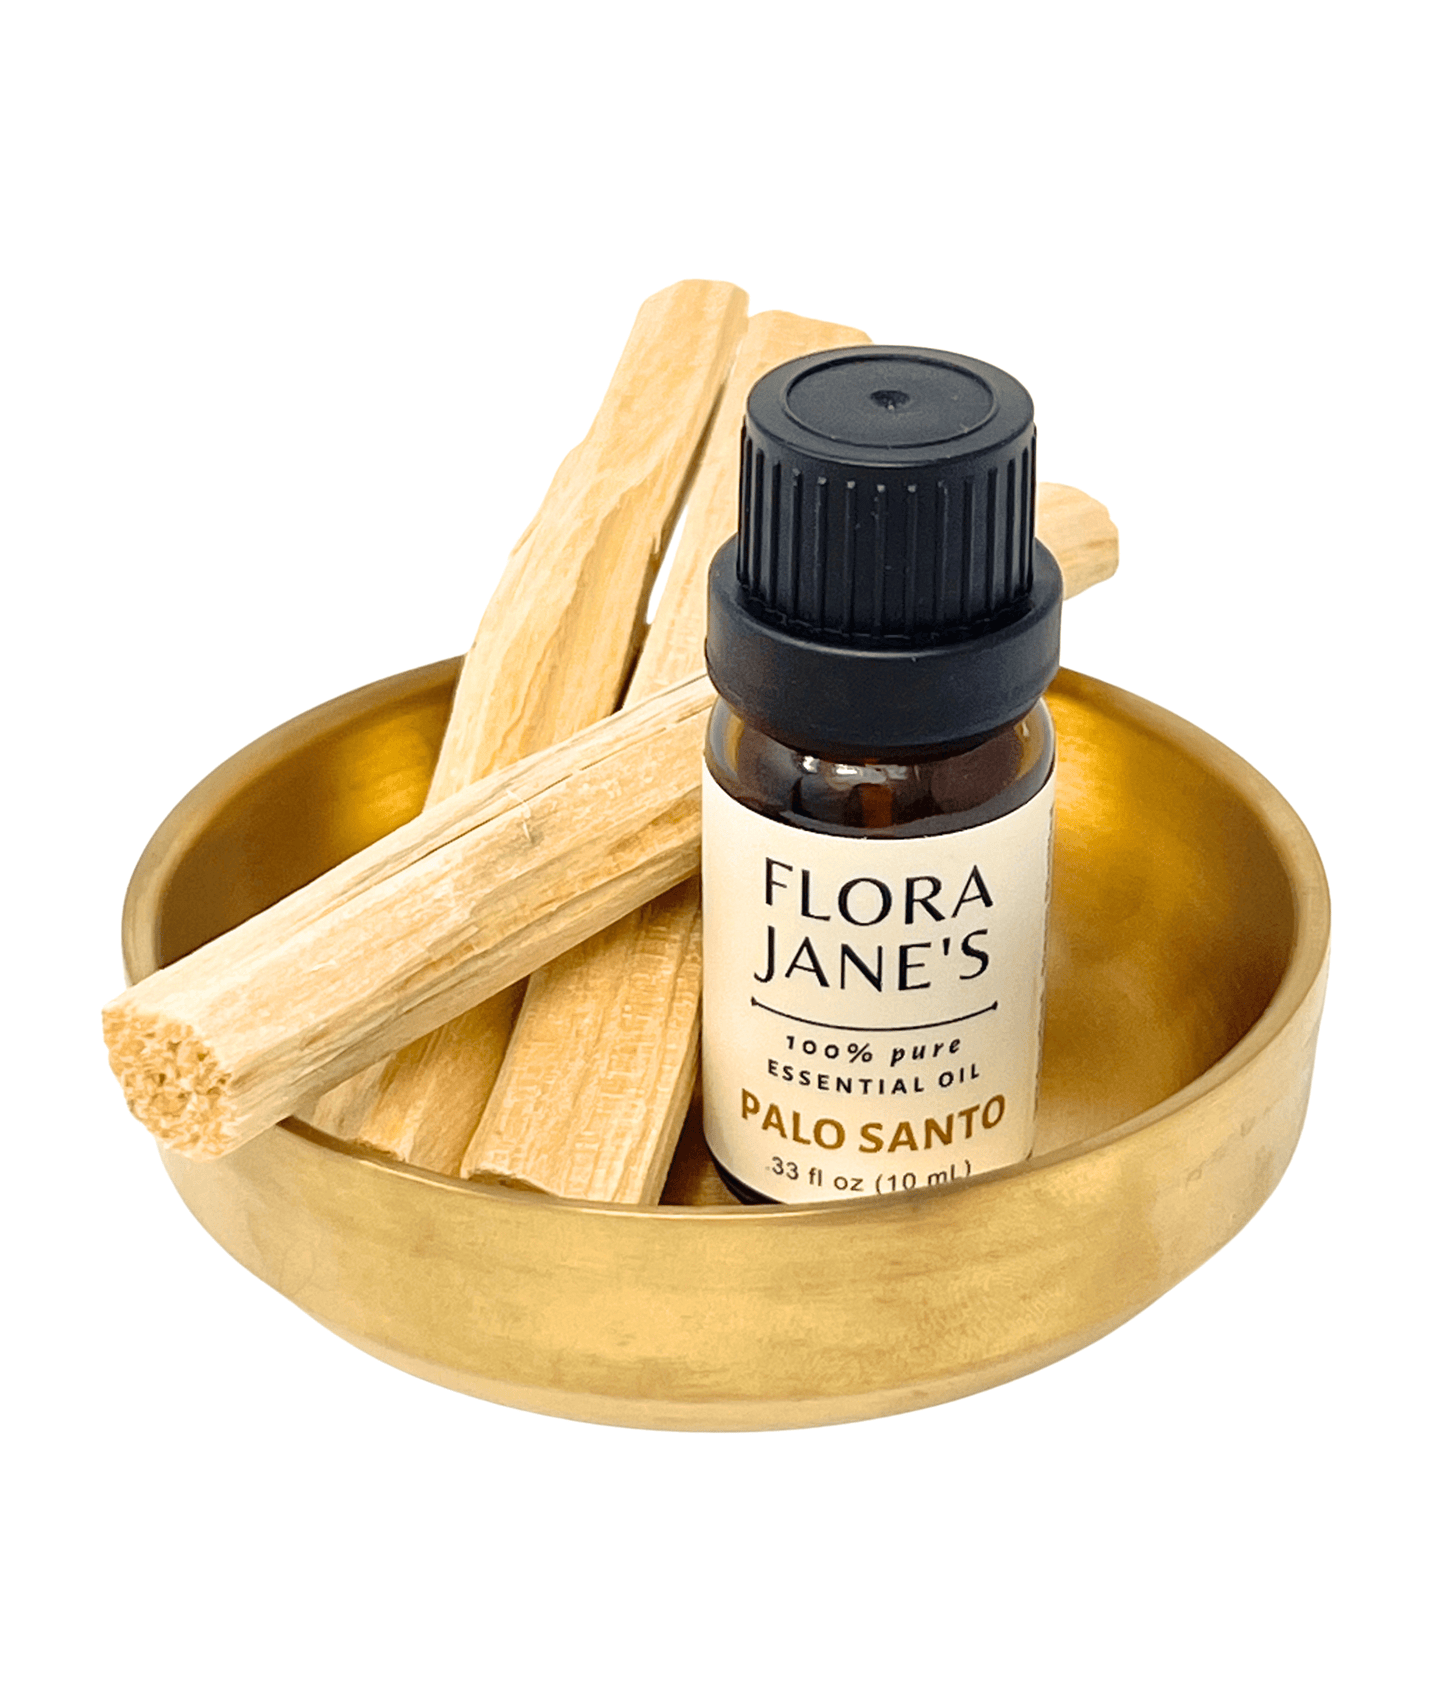 Flora Jane's Essential Oil - Palo Santo